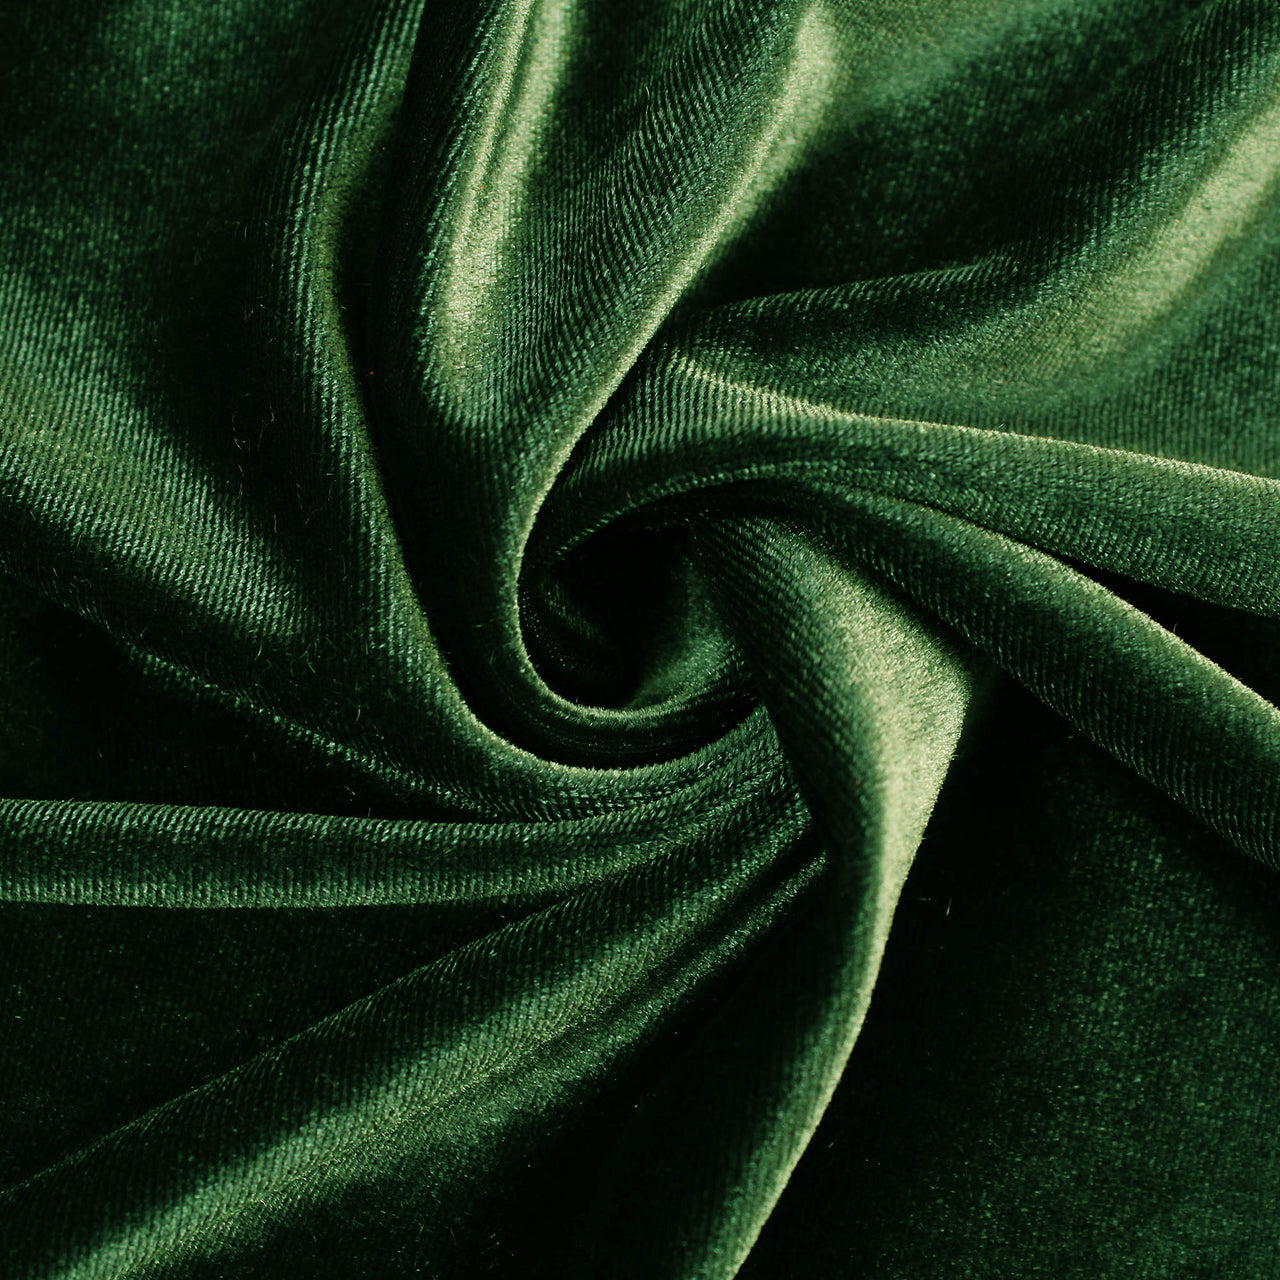 Bottle Green - Spandex Velvet Fabric (4 Way Stretch) - Superior Quality for Dance & Leotards